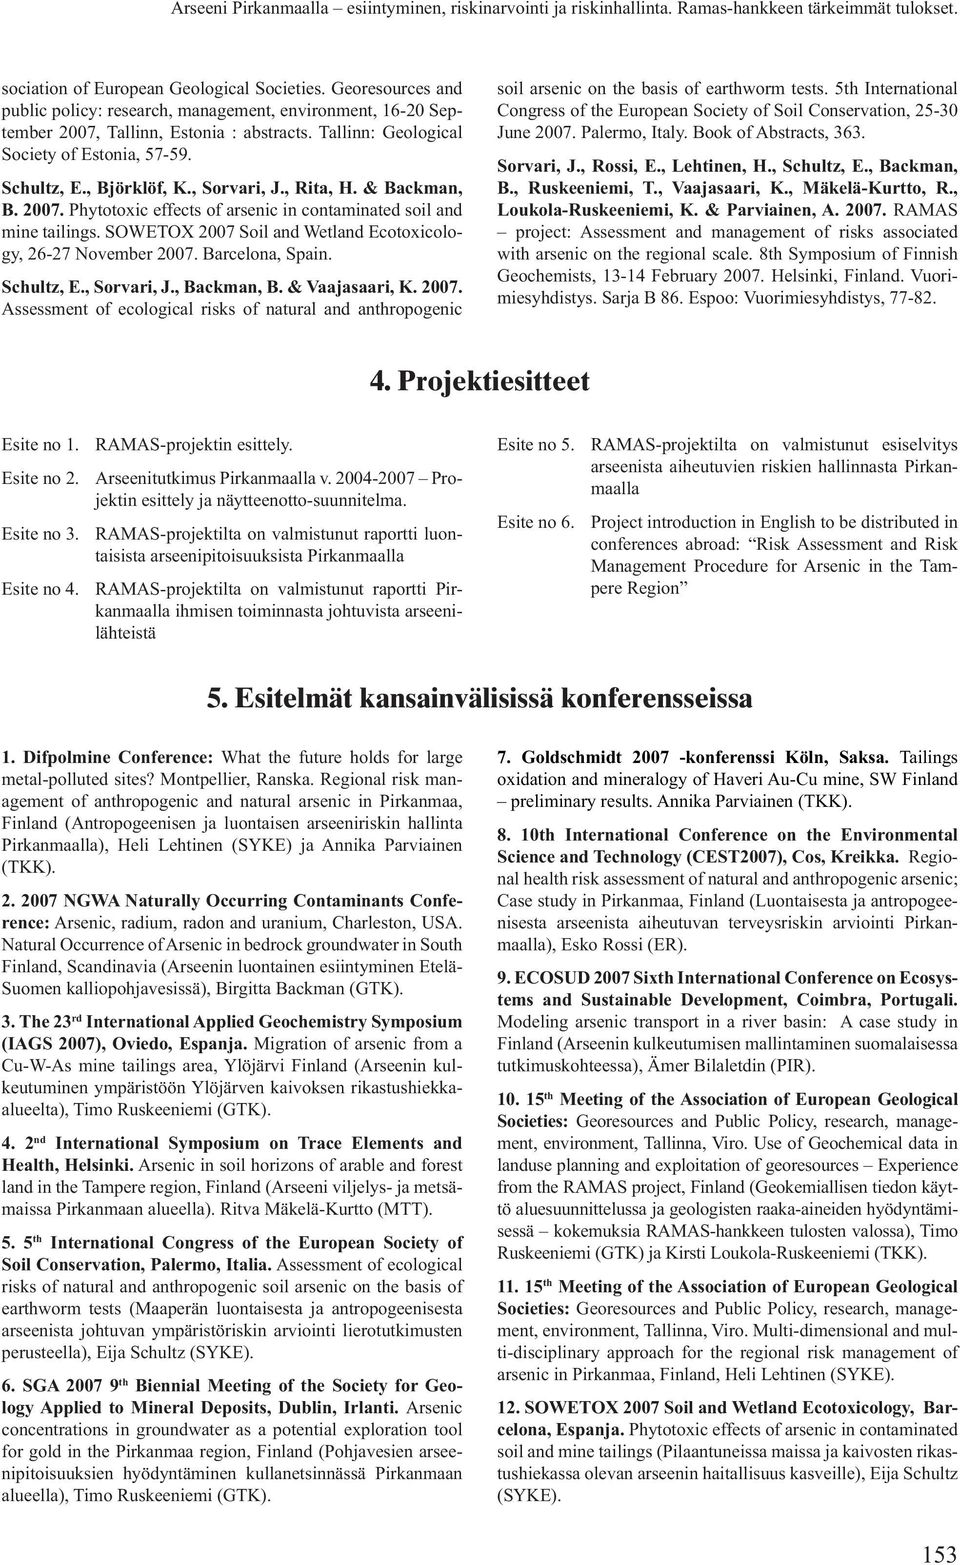 SOWETOX 2007 Soil and Wetland Ecotoxicology, 26-27 November 2007. Barcelona, Spain. Schultz, E., Sorvari, J., Backman, B. & Vaajasaari, K. 2007. Assessment of ecological risks of natural and anthropogenic soil arsenic on the basis of earthworm tests.